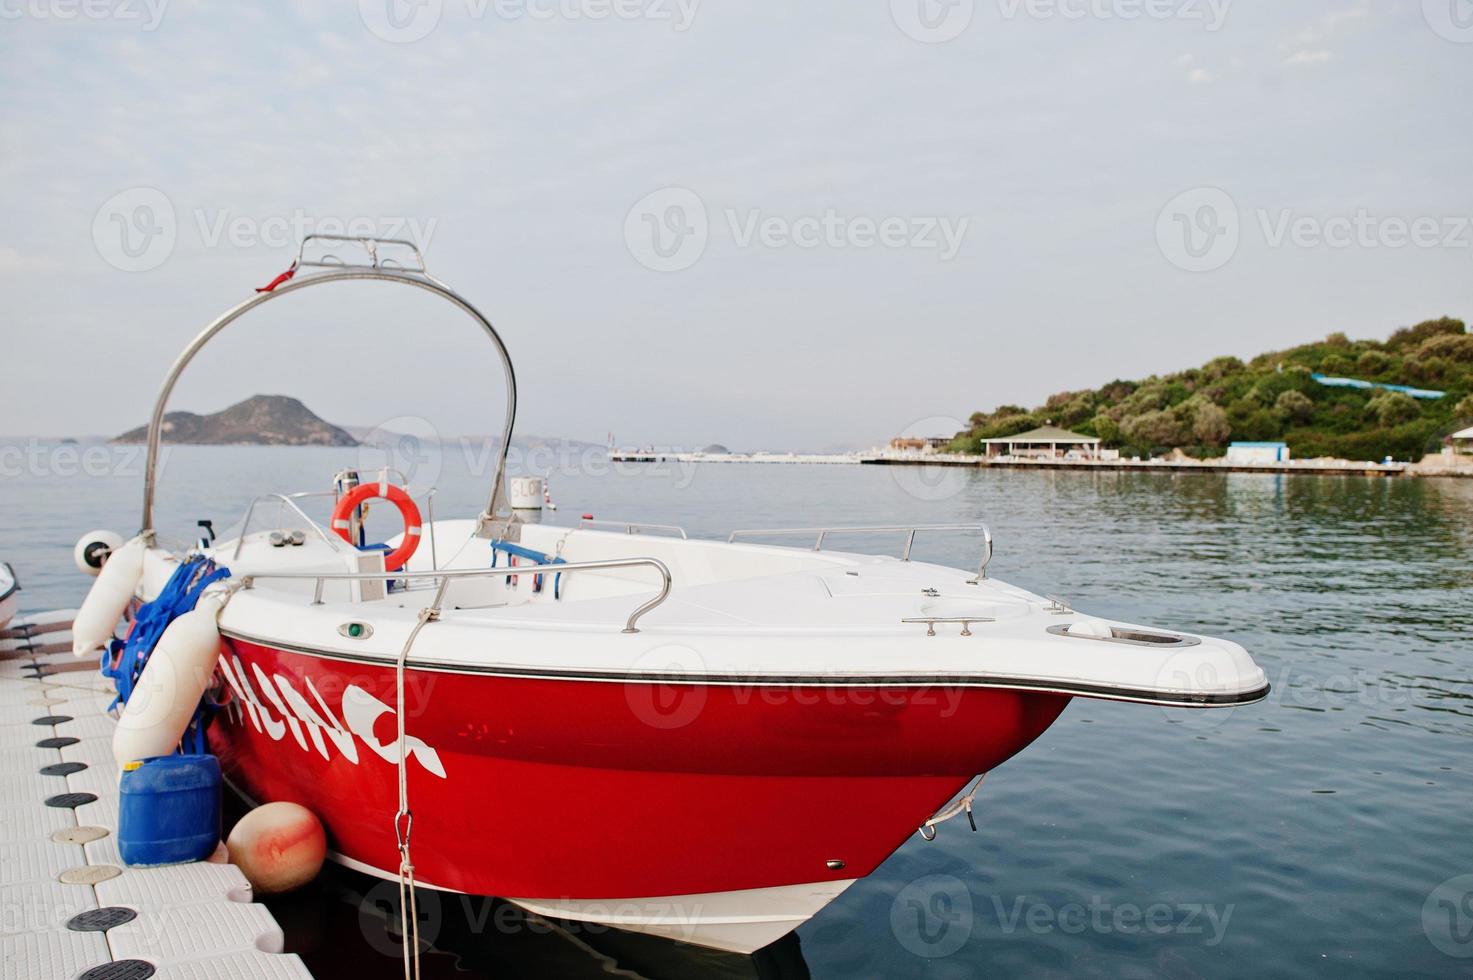 barca parasailing rossa su un mare blu calmo di bodrum, in Turchia. foto